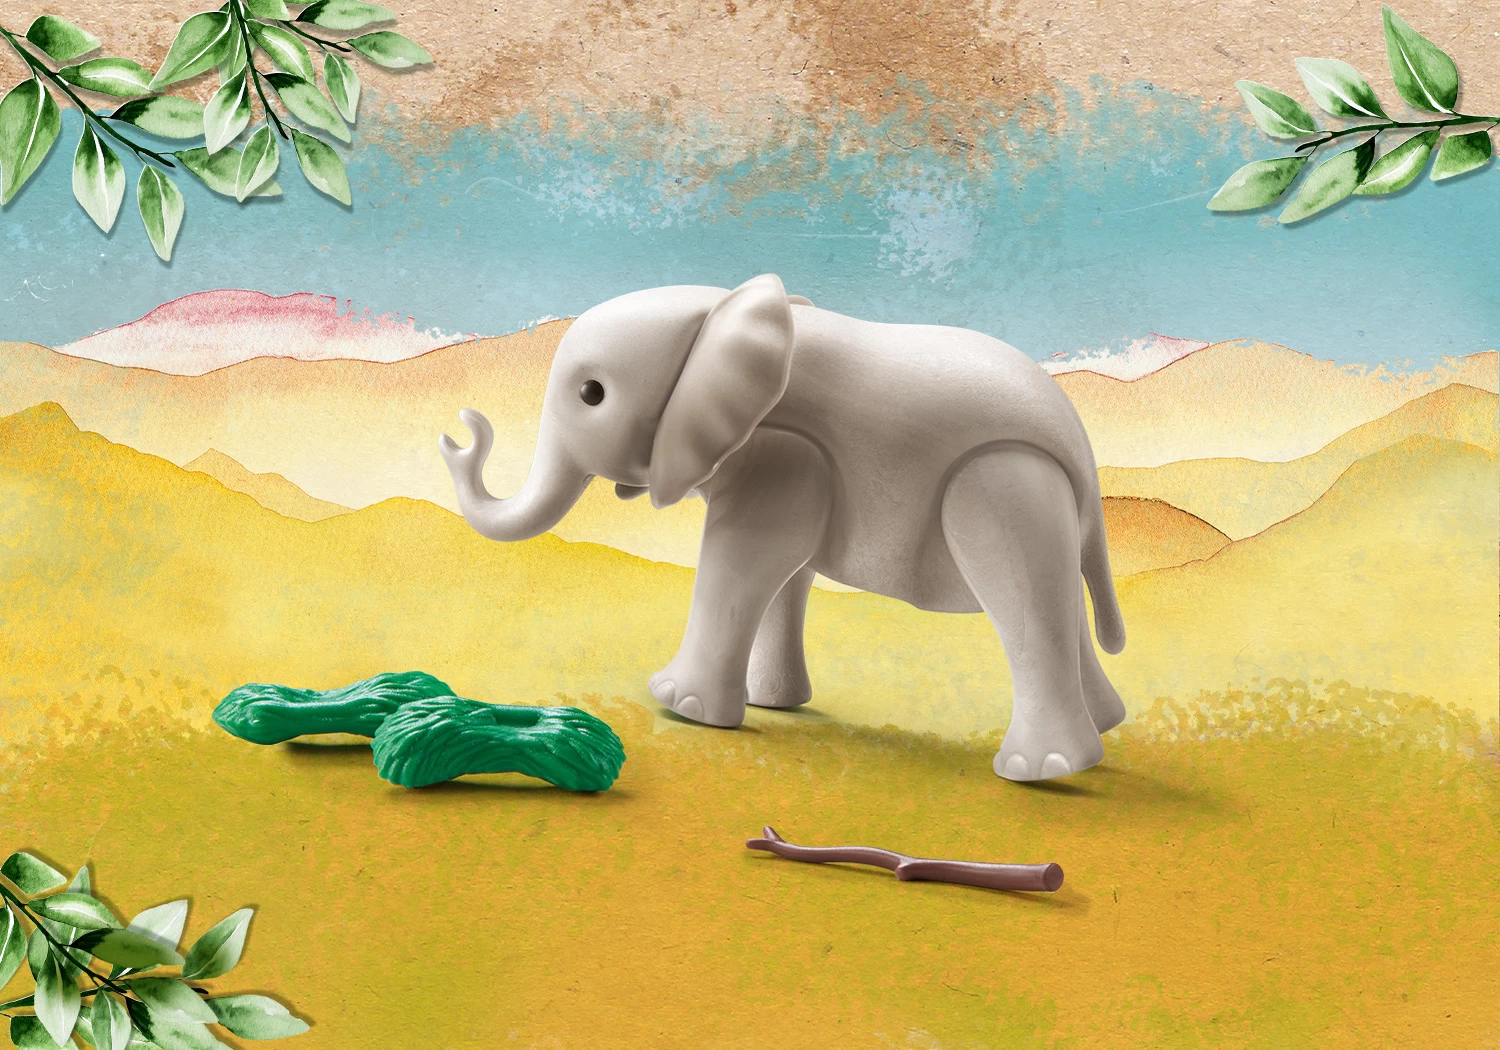 Playmobil 71049 - Junger Elefant - WILTOPIA